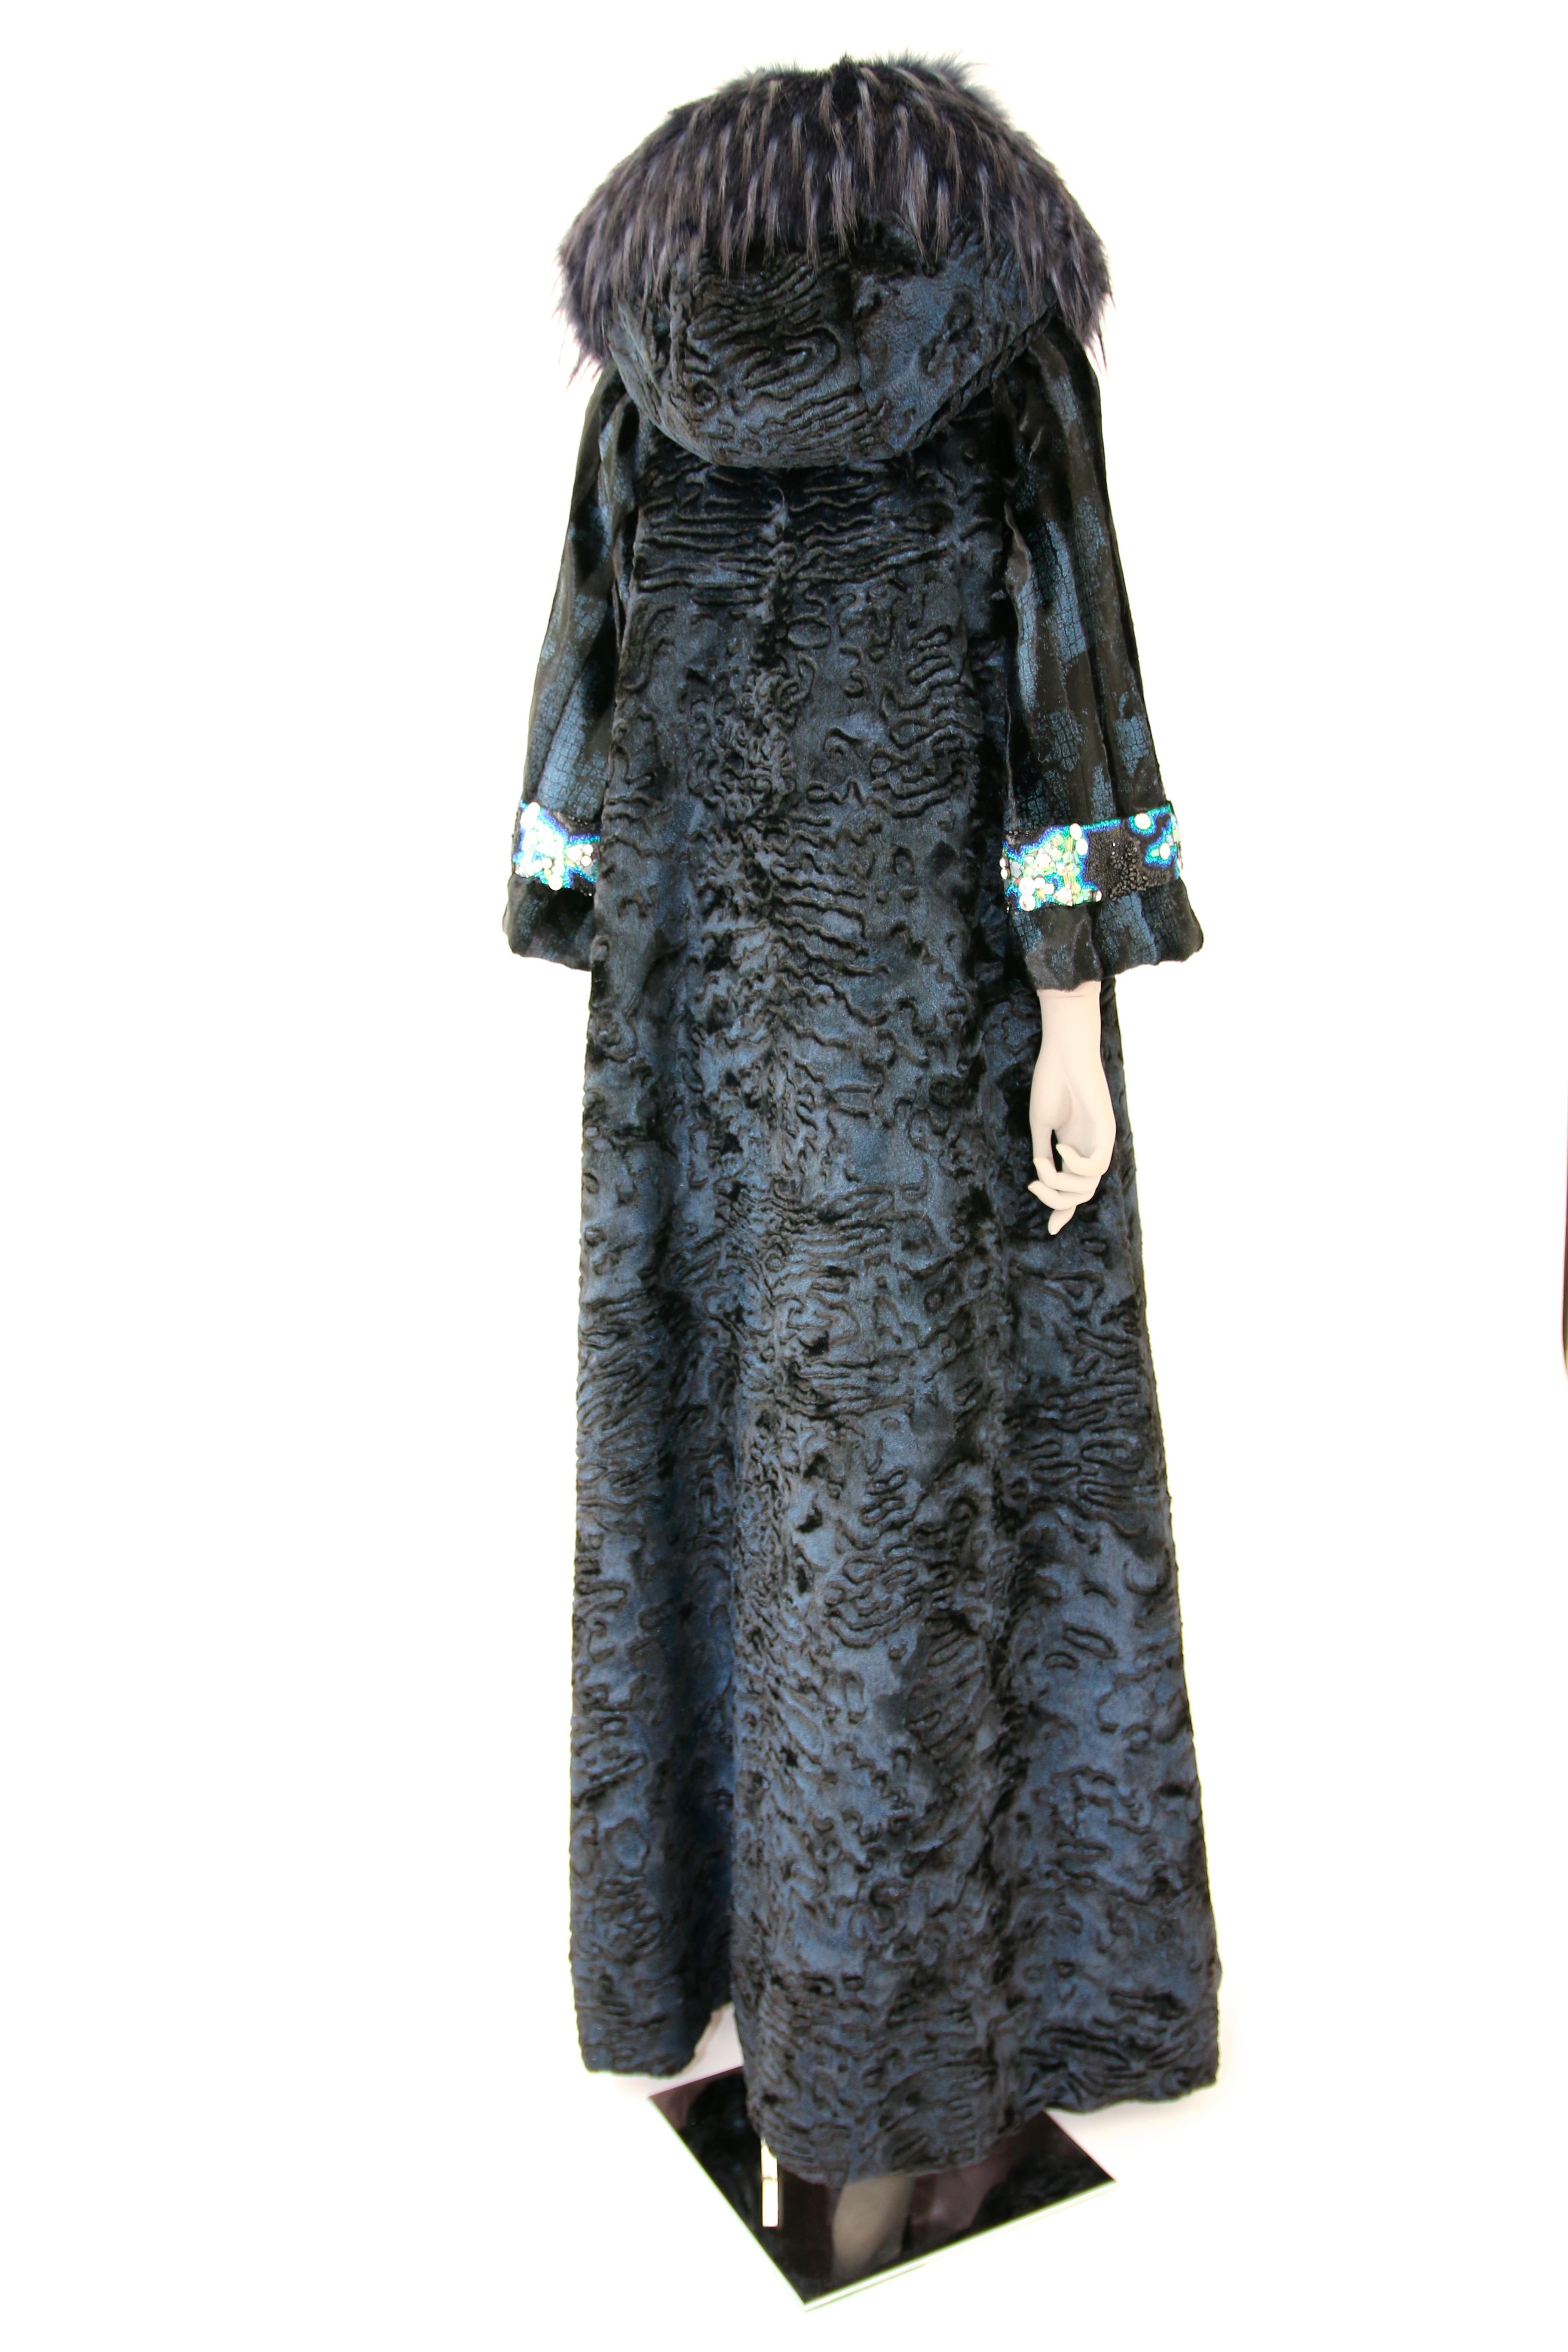 Pelush Blue Faux Fur Astrakhan Caftan Coat W/Embroidery And Detachable Hood - S For Sale 2